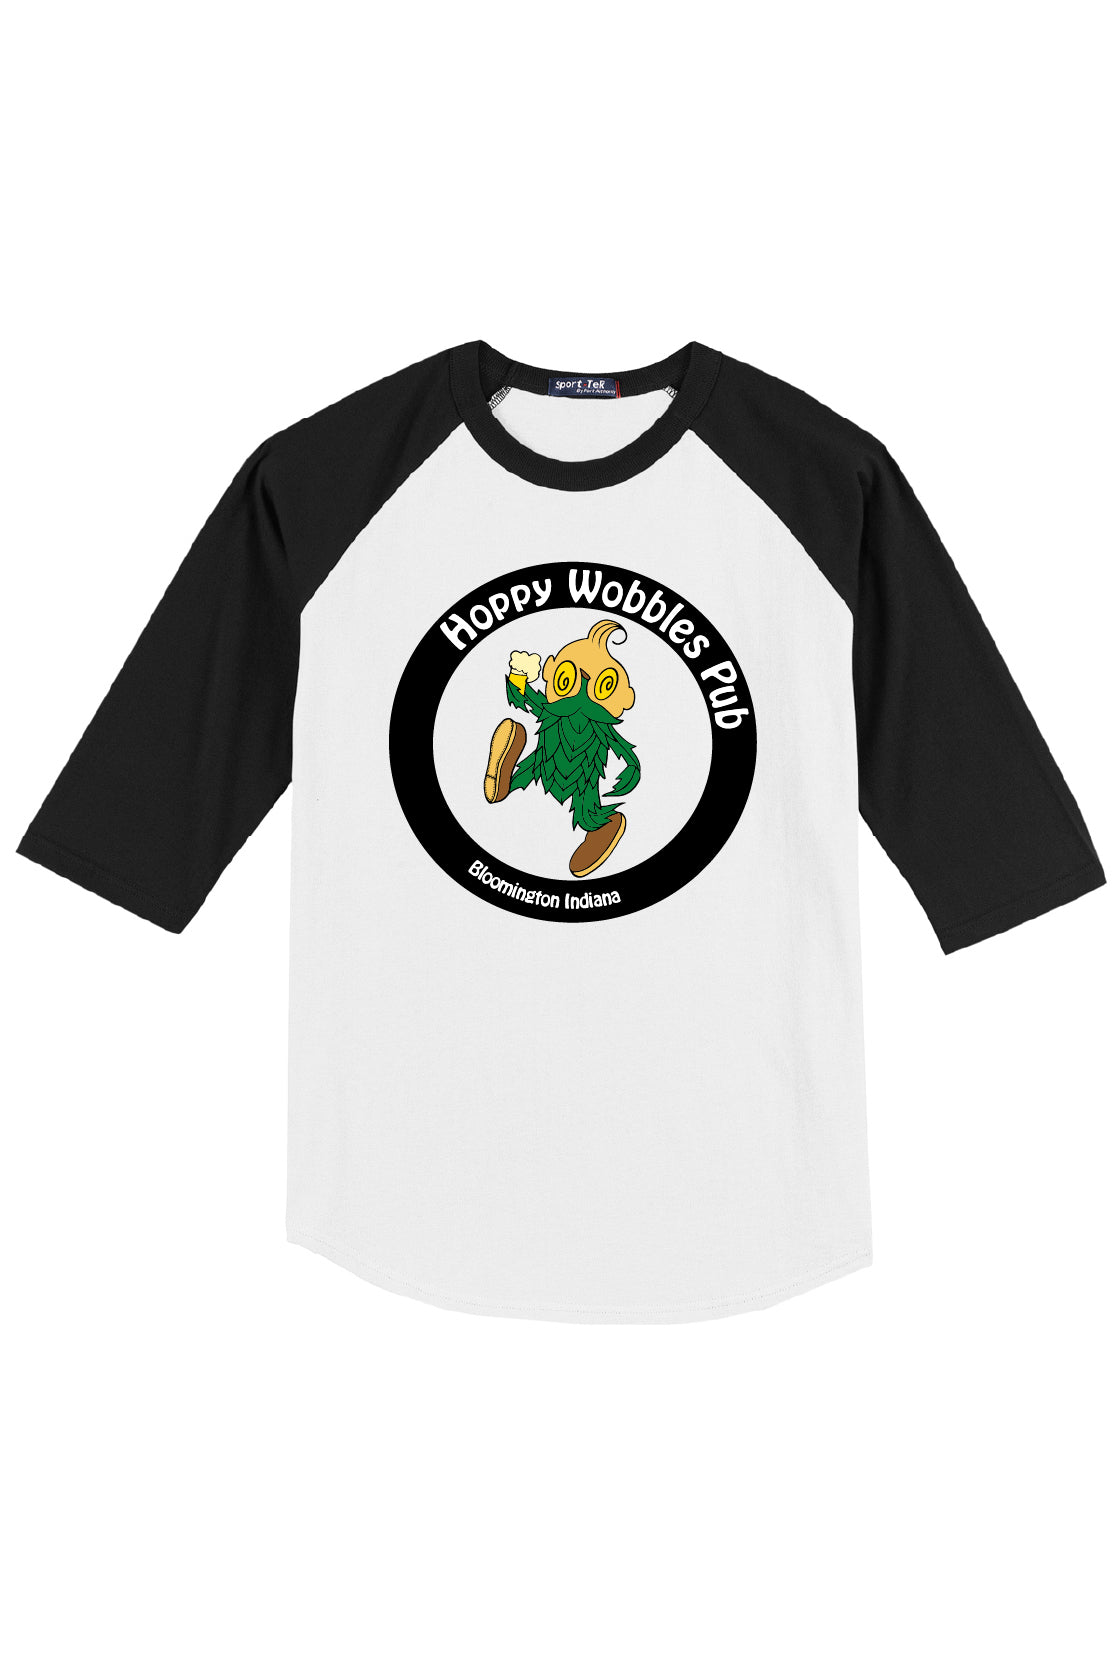 Hoppy Wobbles 3/4 Sleeve Raglan Baseball Shirt